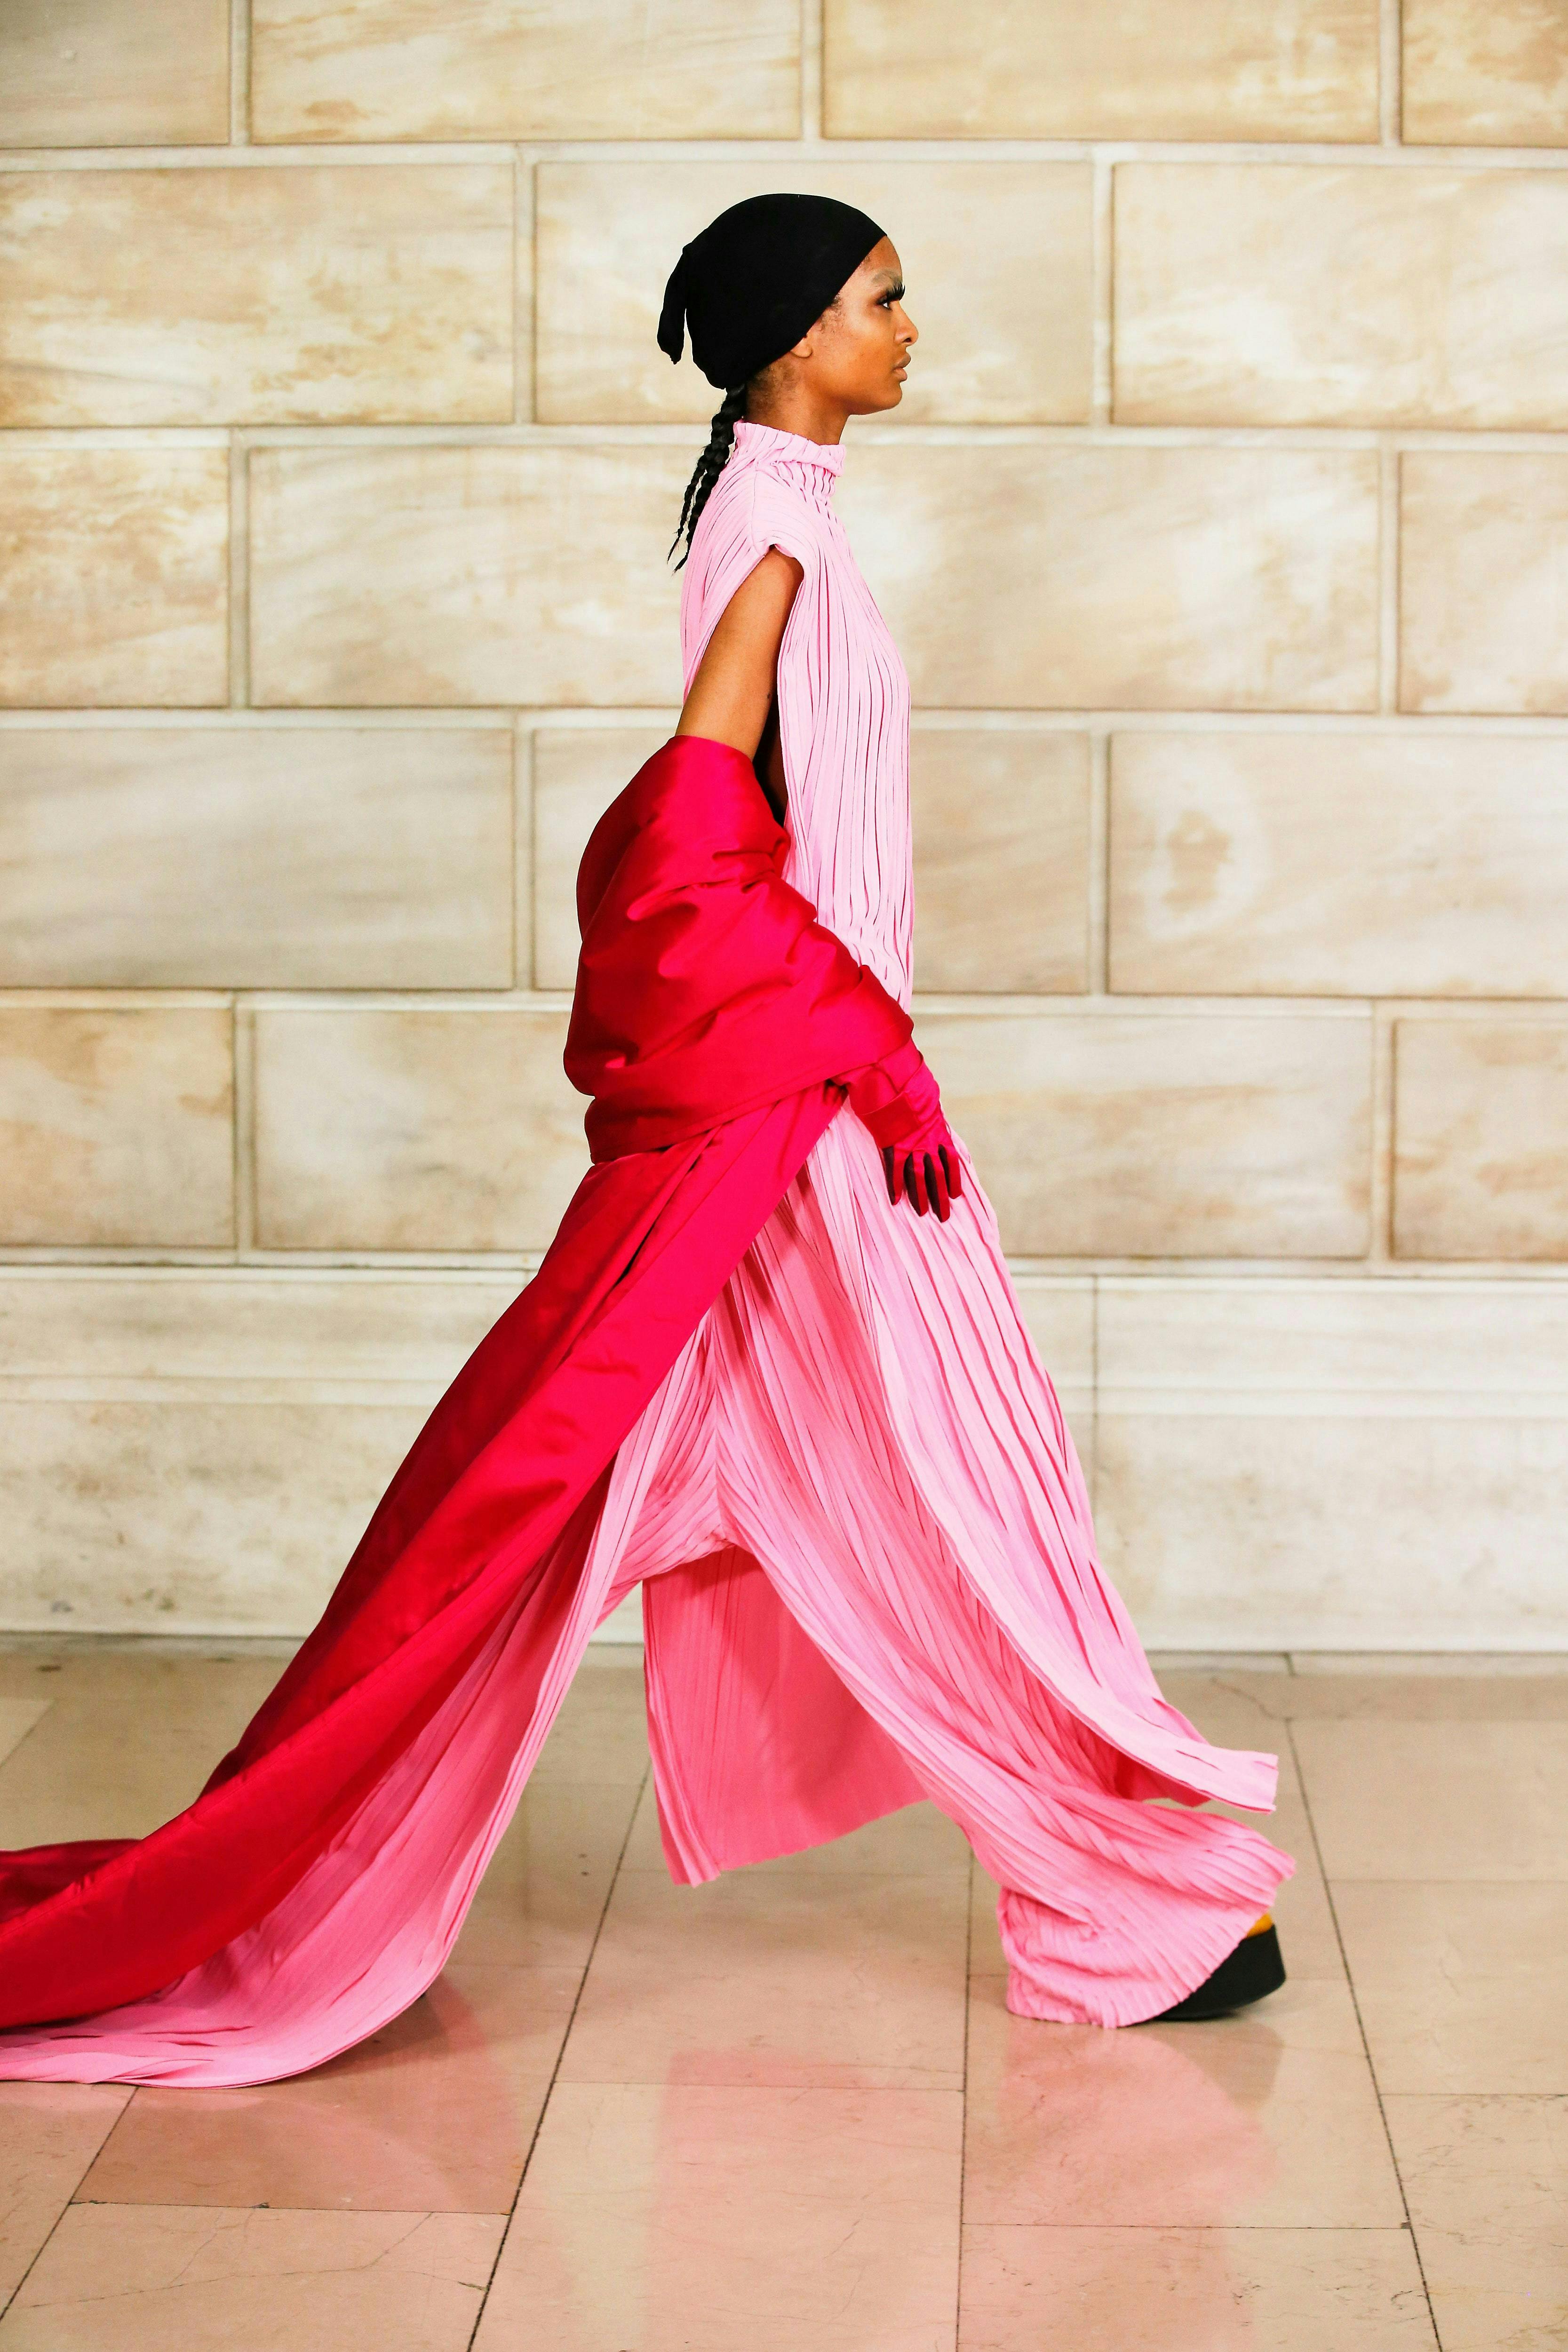 dance pose leisure activities performer person clothing apparel dance dress flamenco female